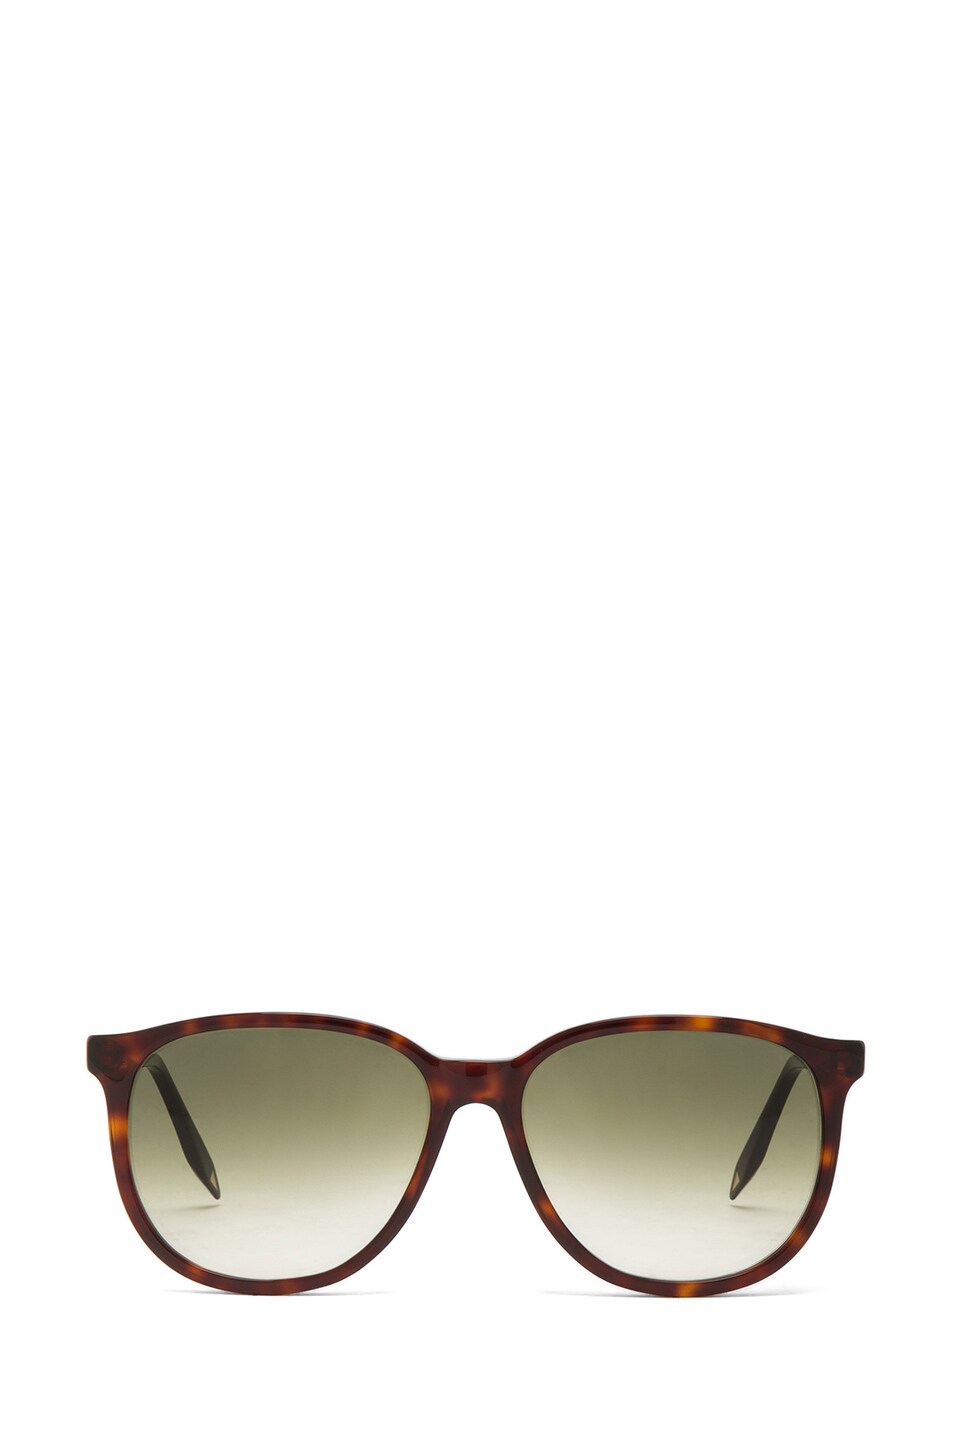 Victoria Beckham Rock and Roller Sunglasses in Dark Turtle | FWRD